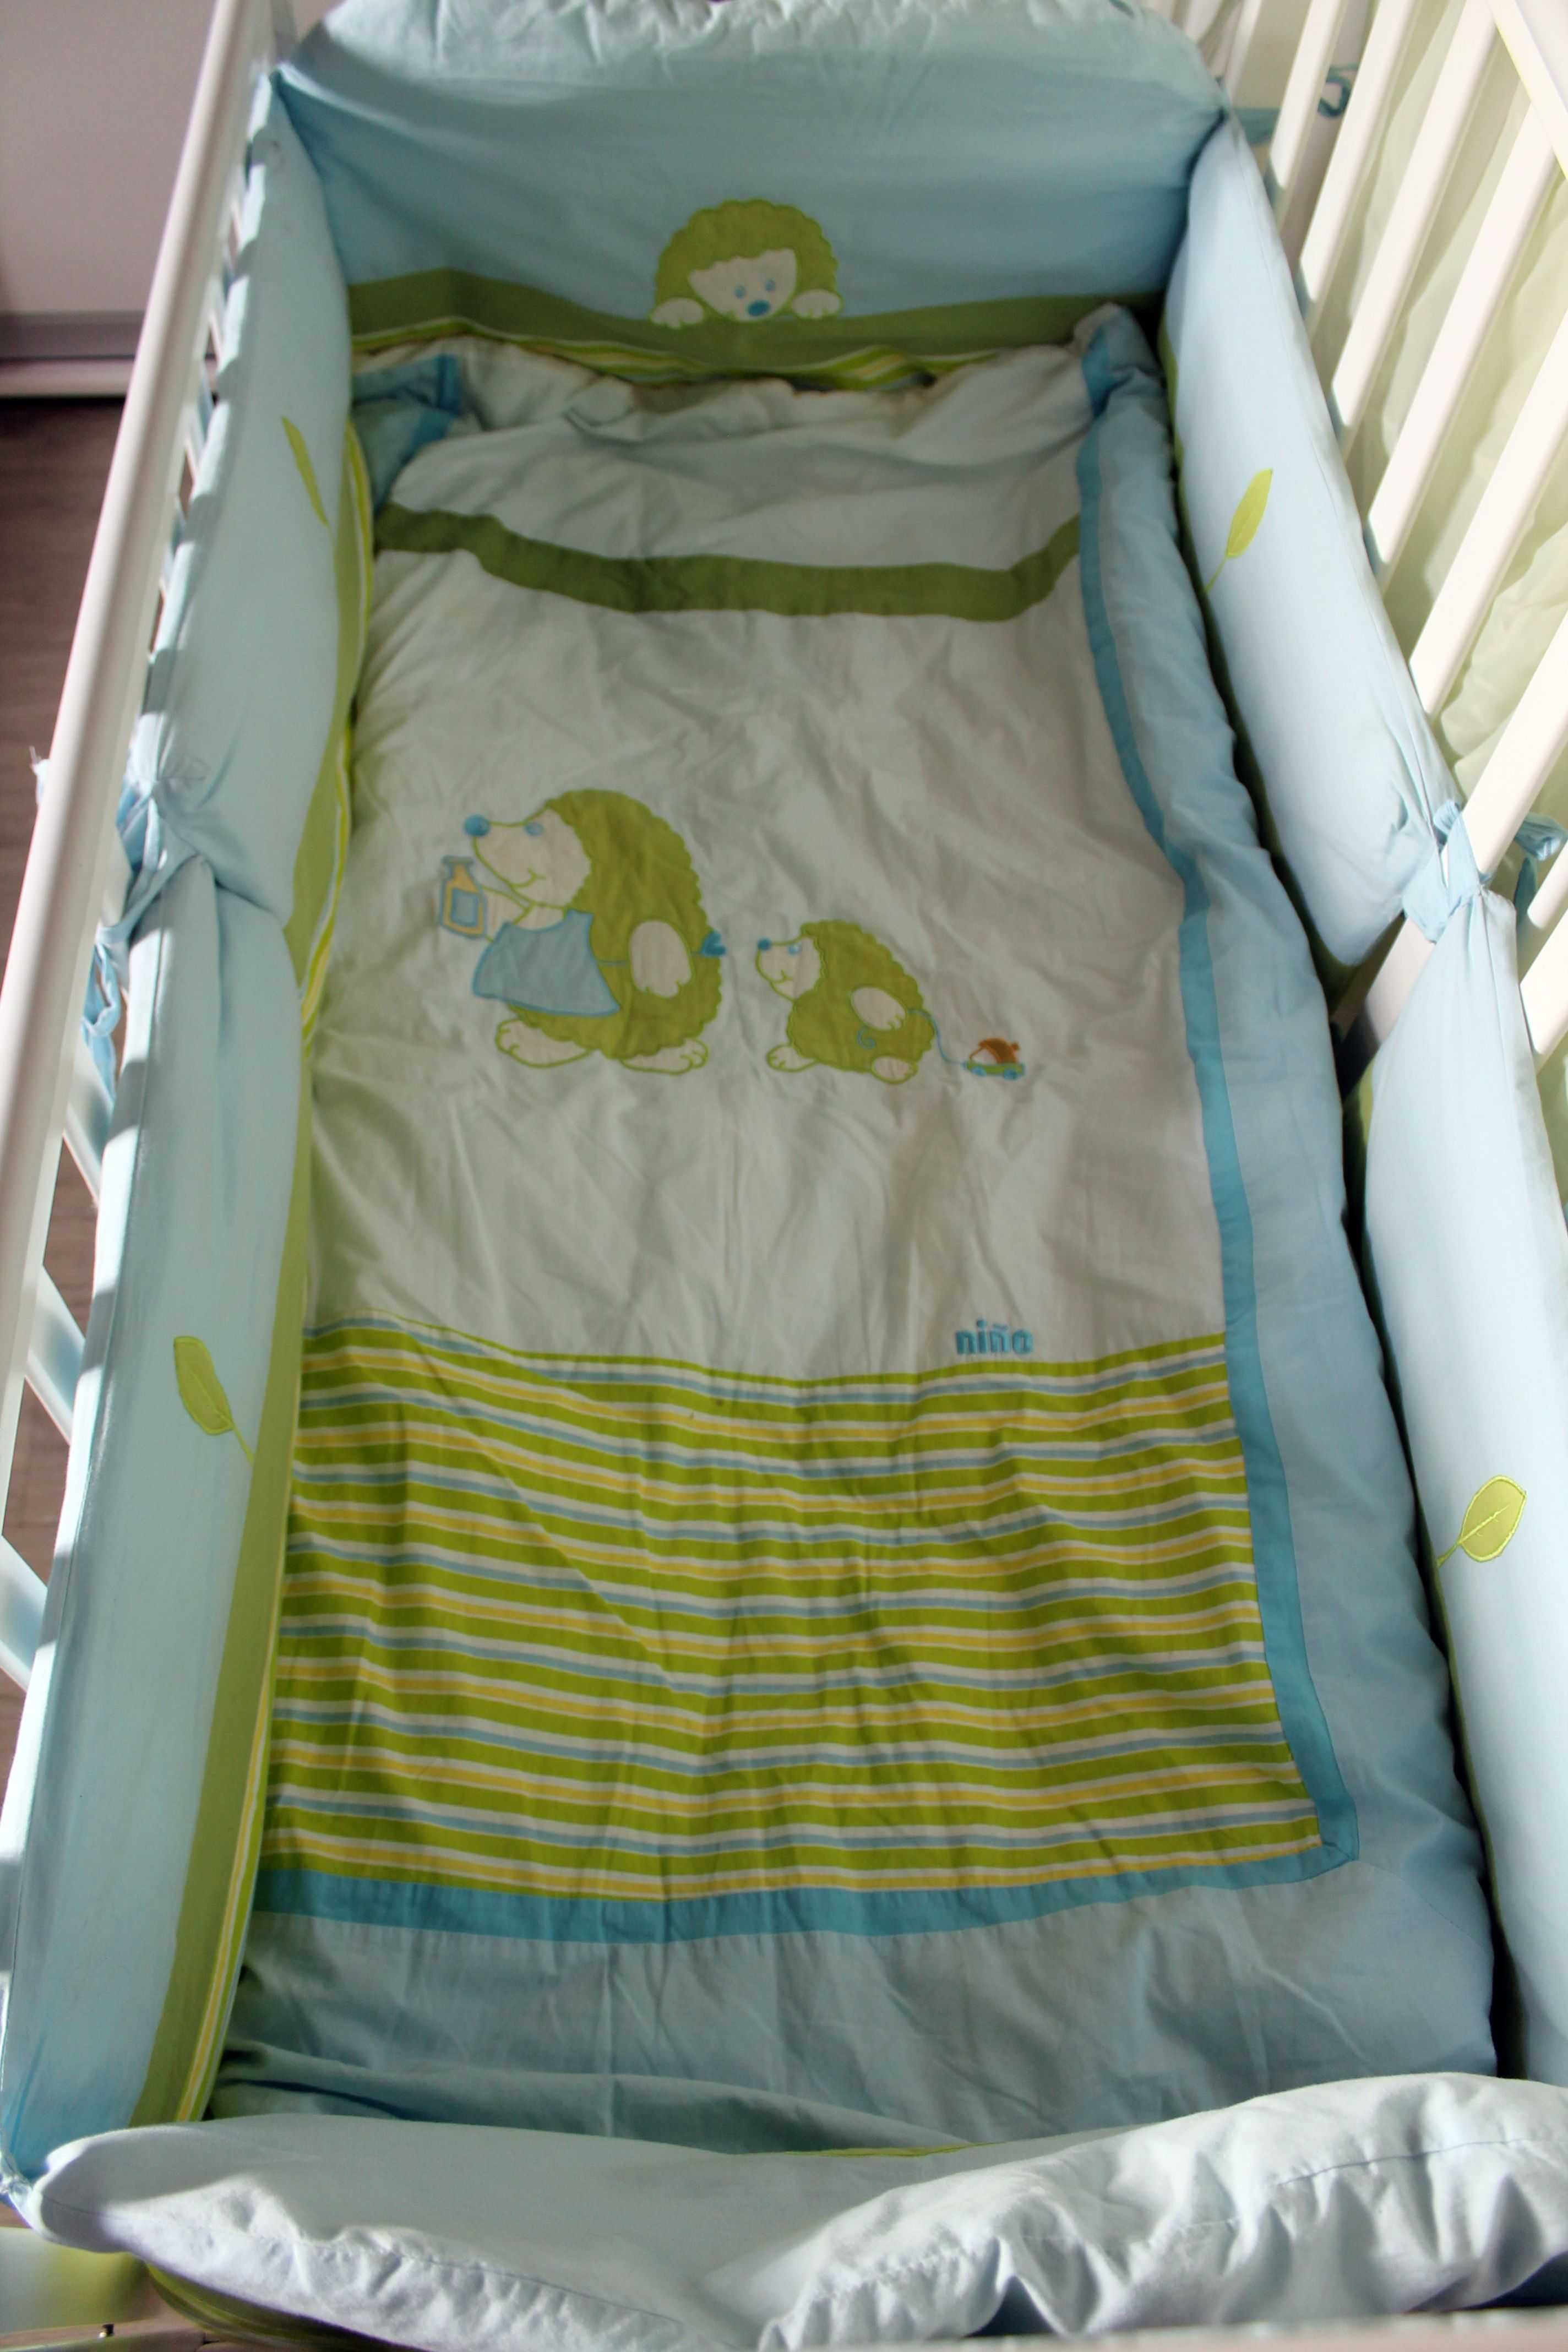 Продам детскую кроватку Верес Соня + матрас, одеяло, защита, балдахин